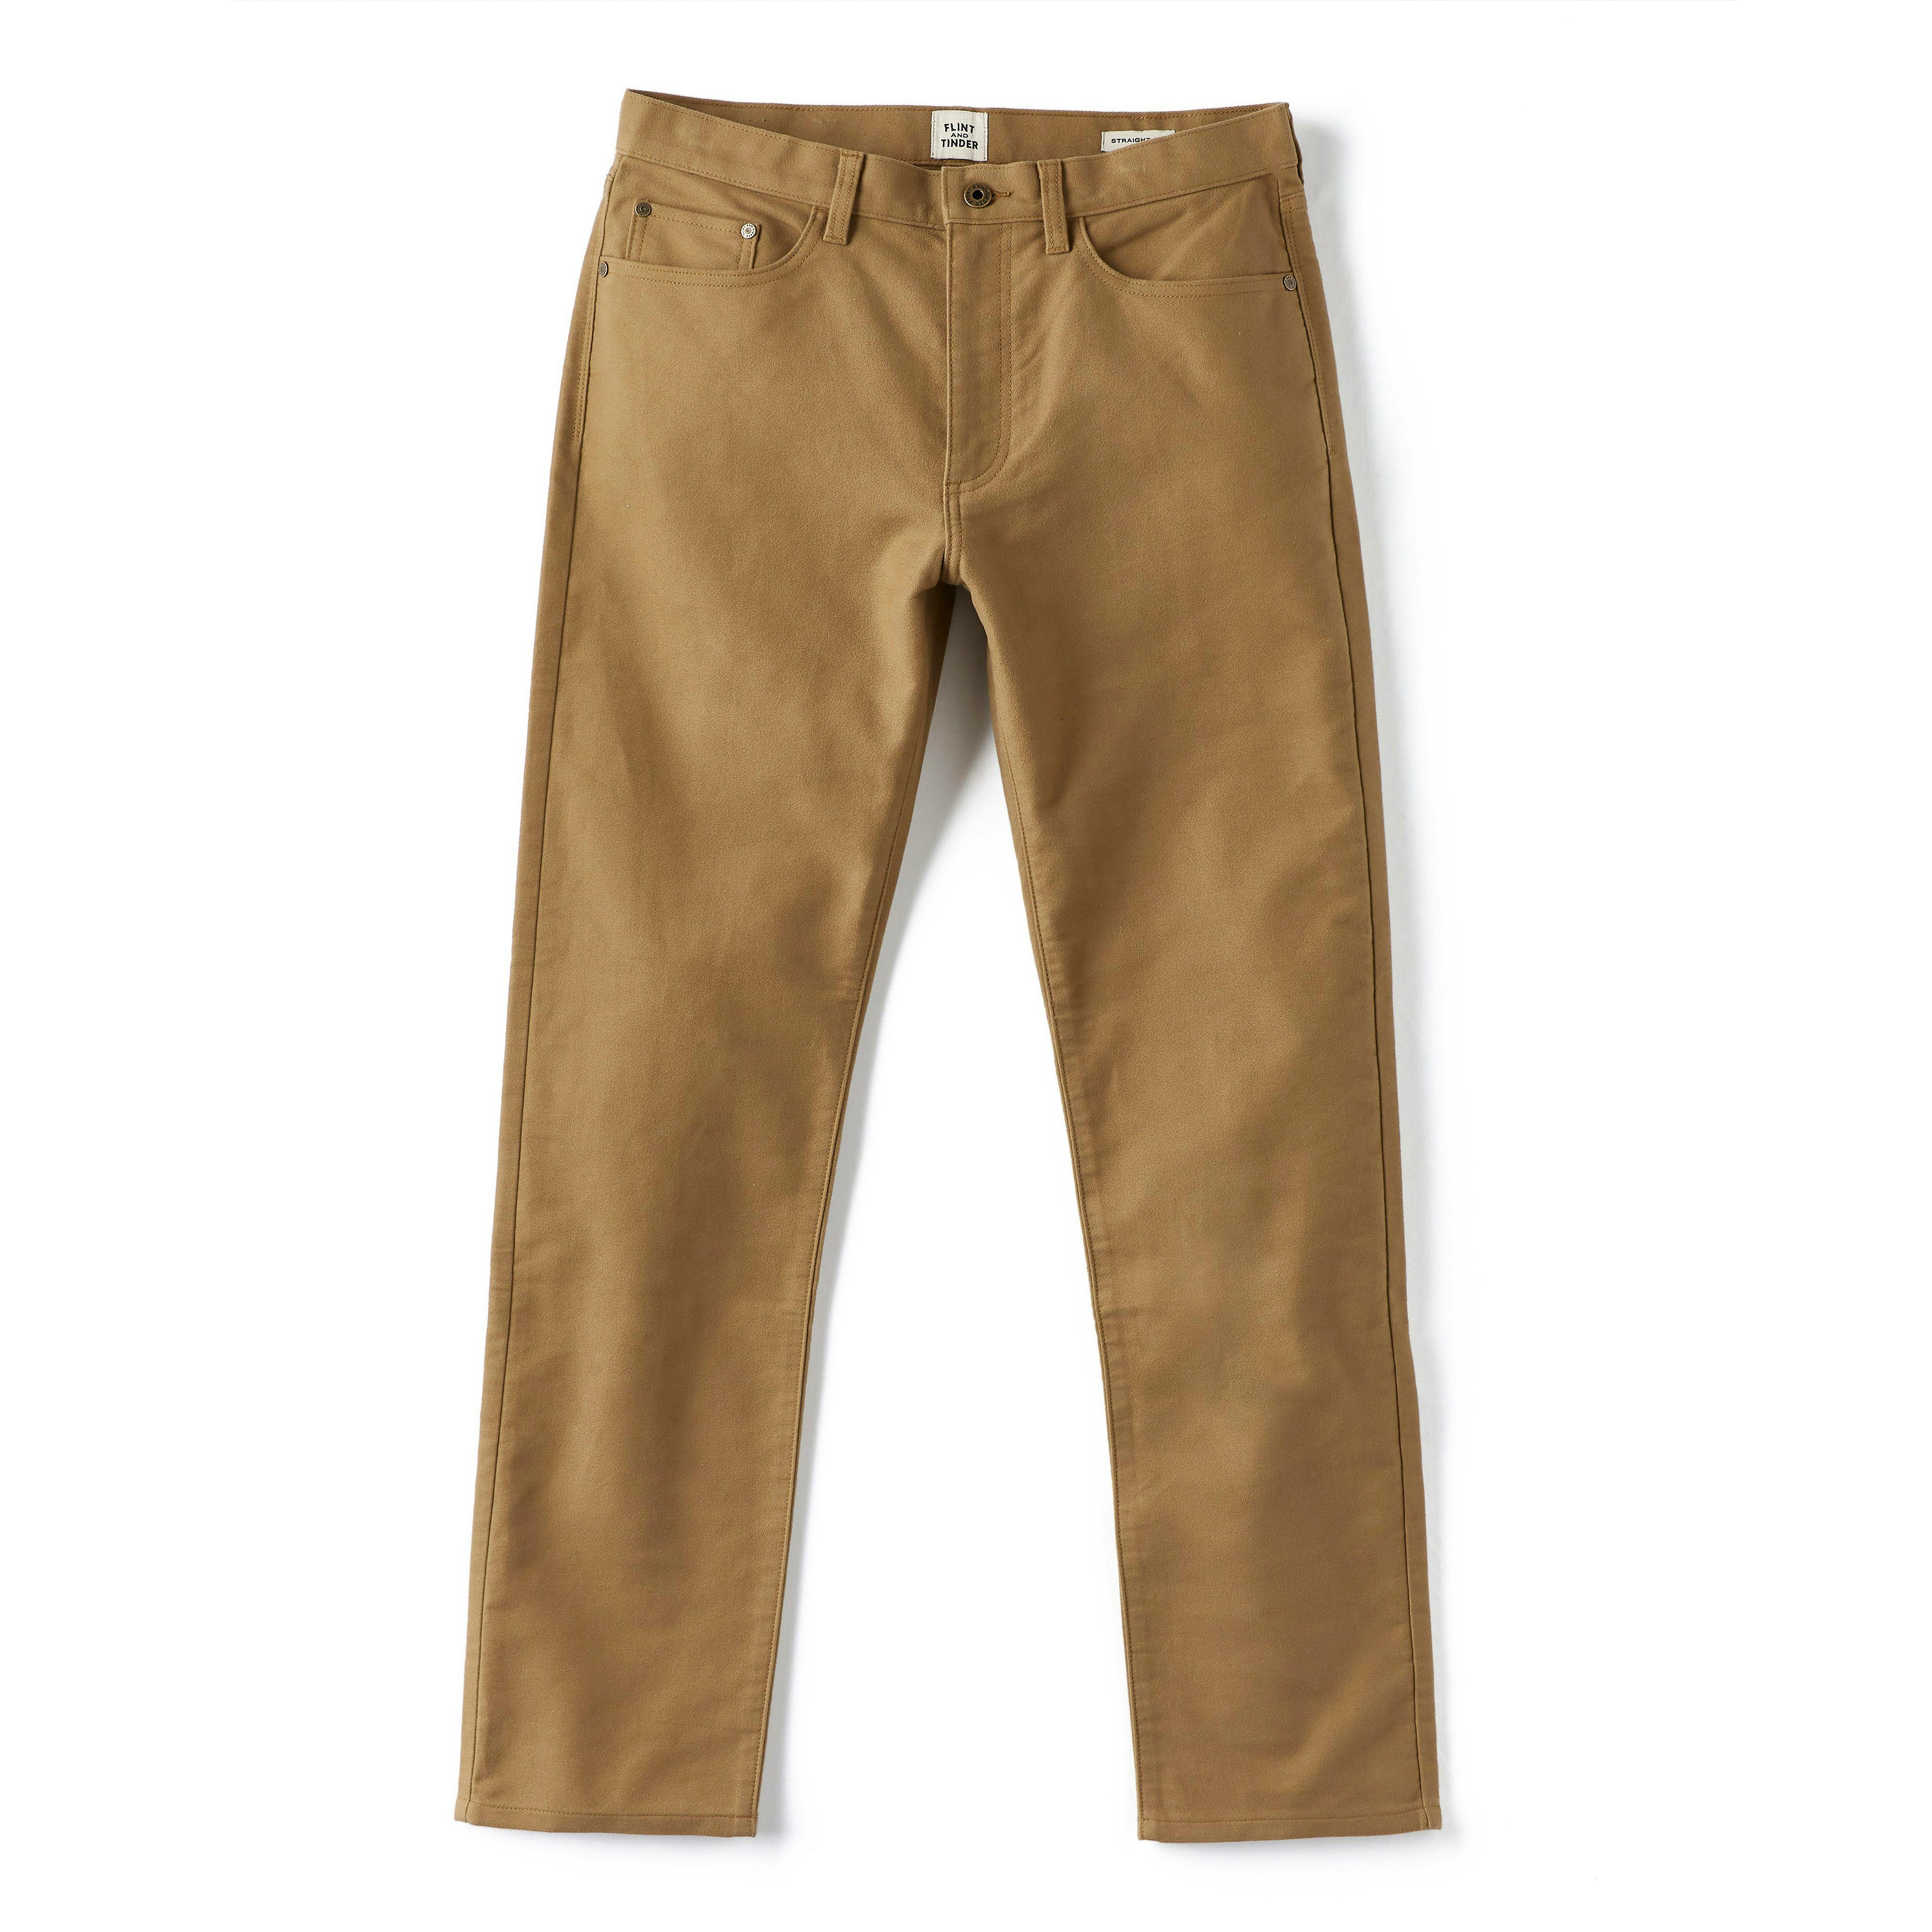 The Brown Moleskin 5 Pocket Custom Pant